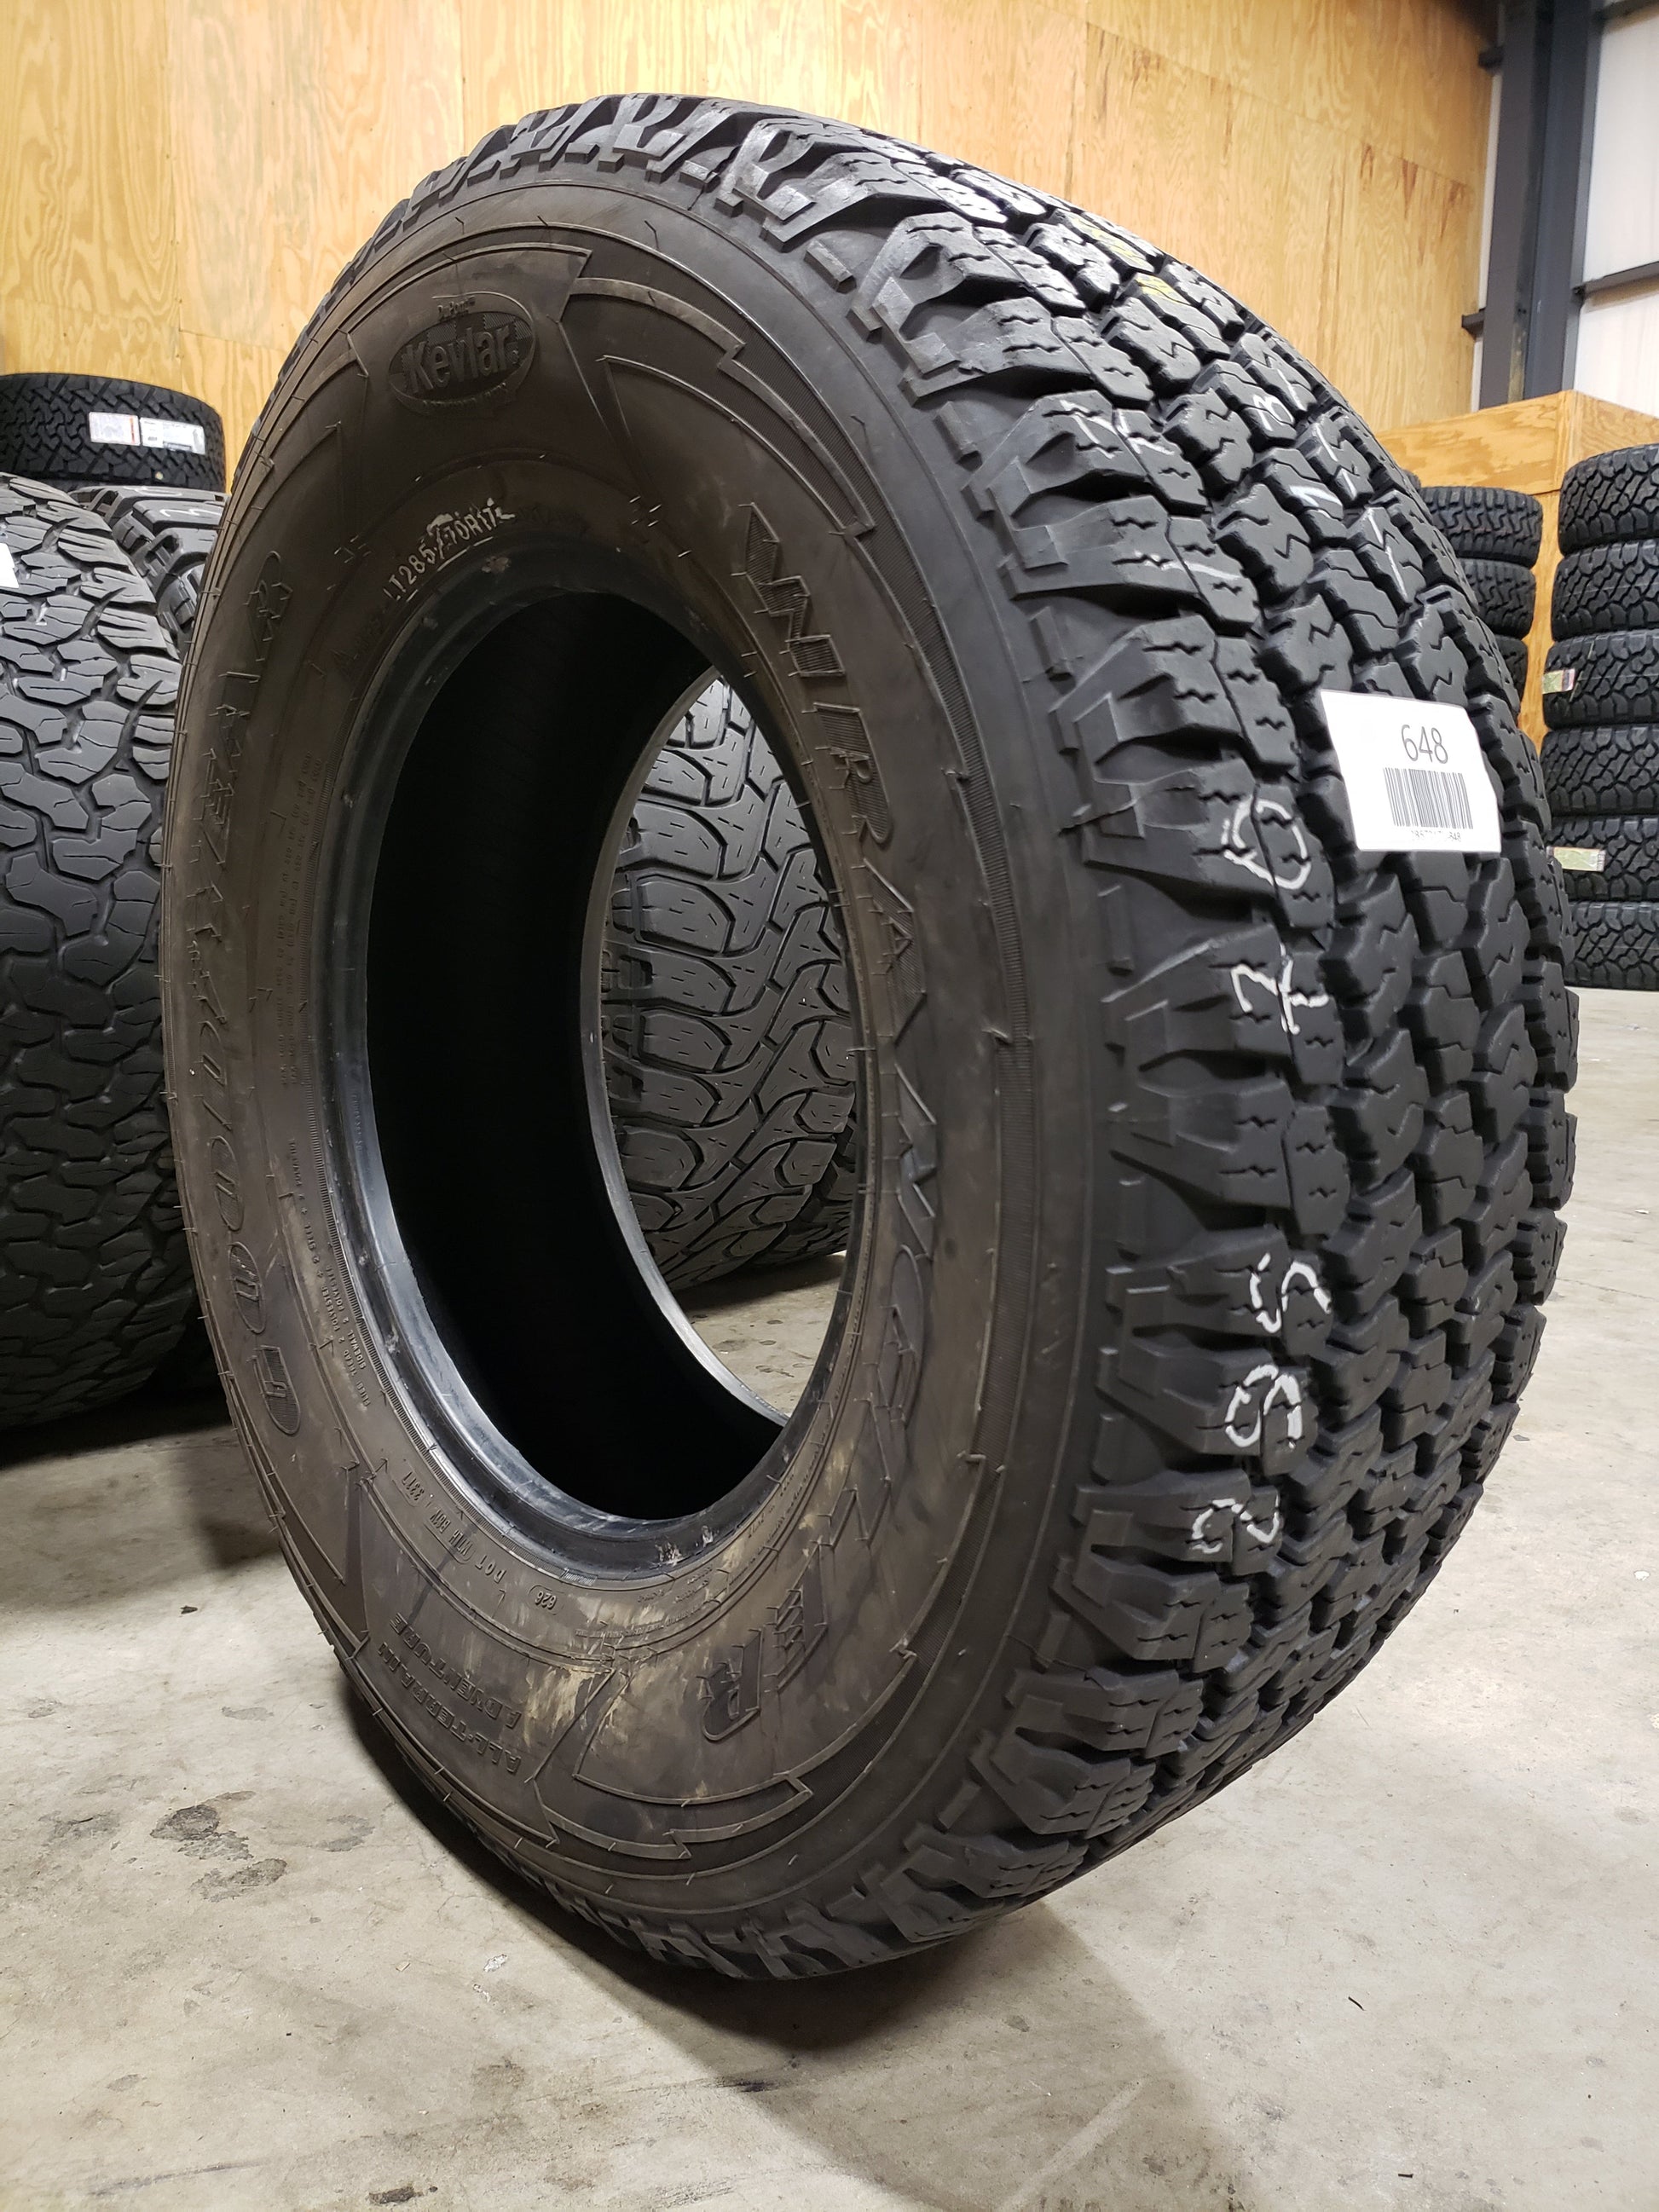 SINGLE 285/70R17 Goodyear Wrangler All-Terrain Aventure 121/118 R E - –  High Tread Used Tires